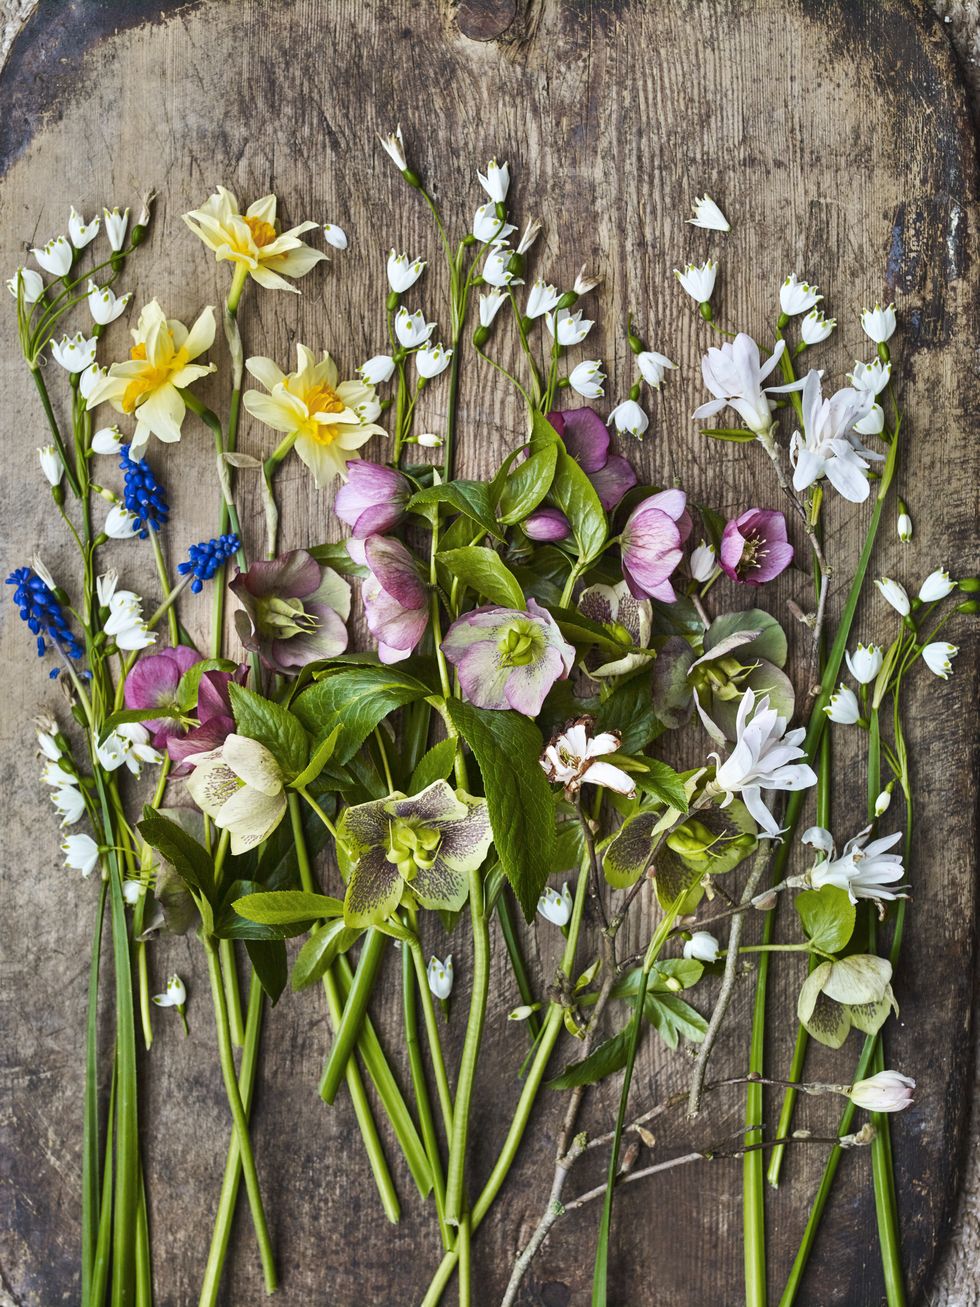 botanical artist creating flower casts